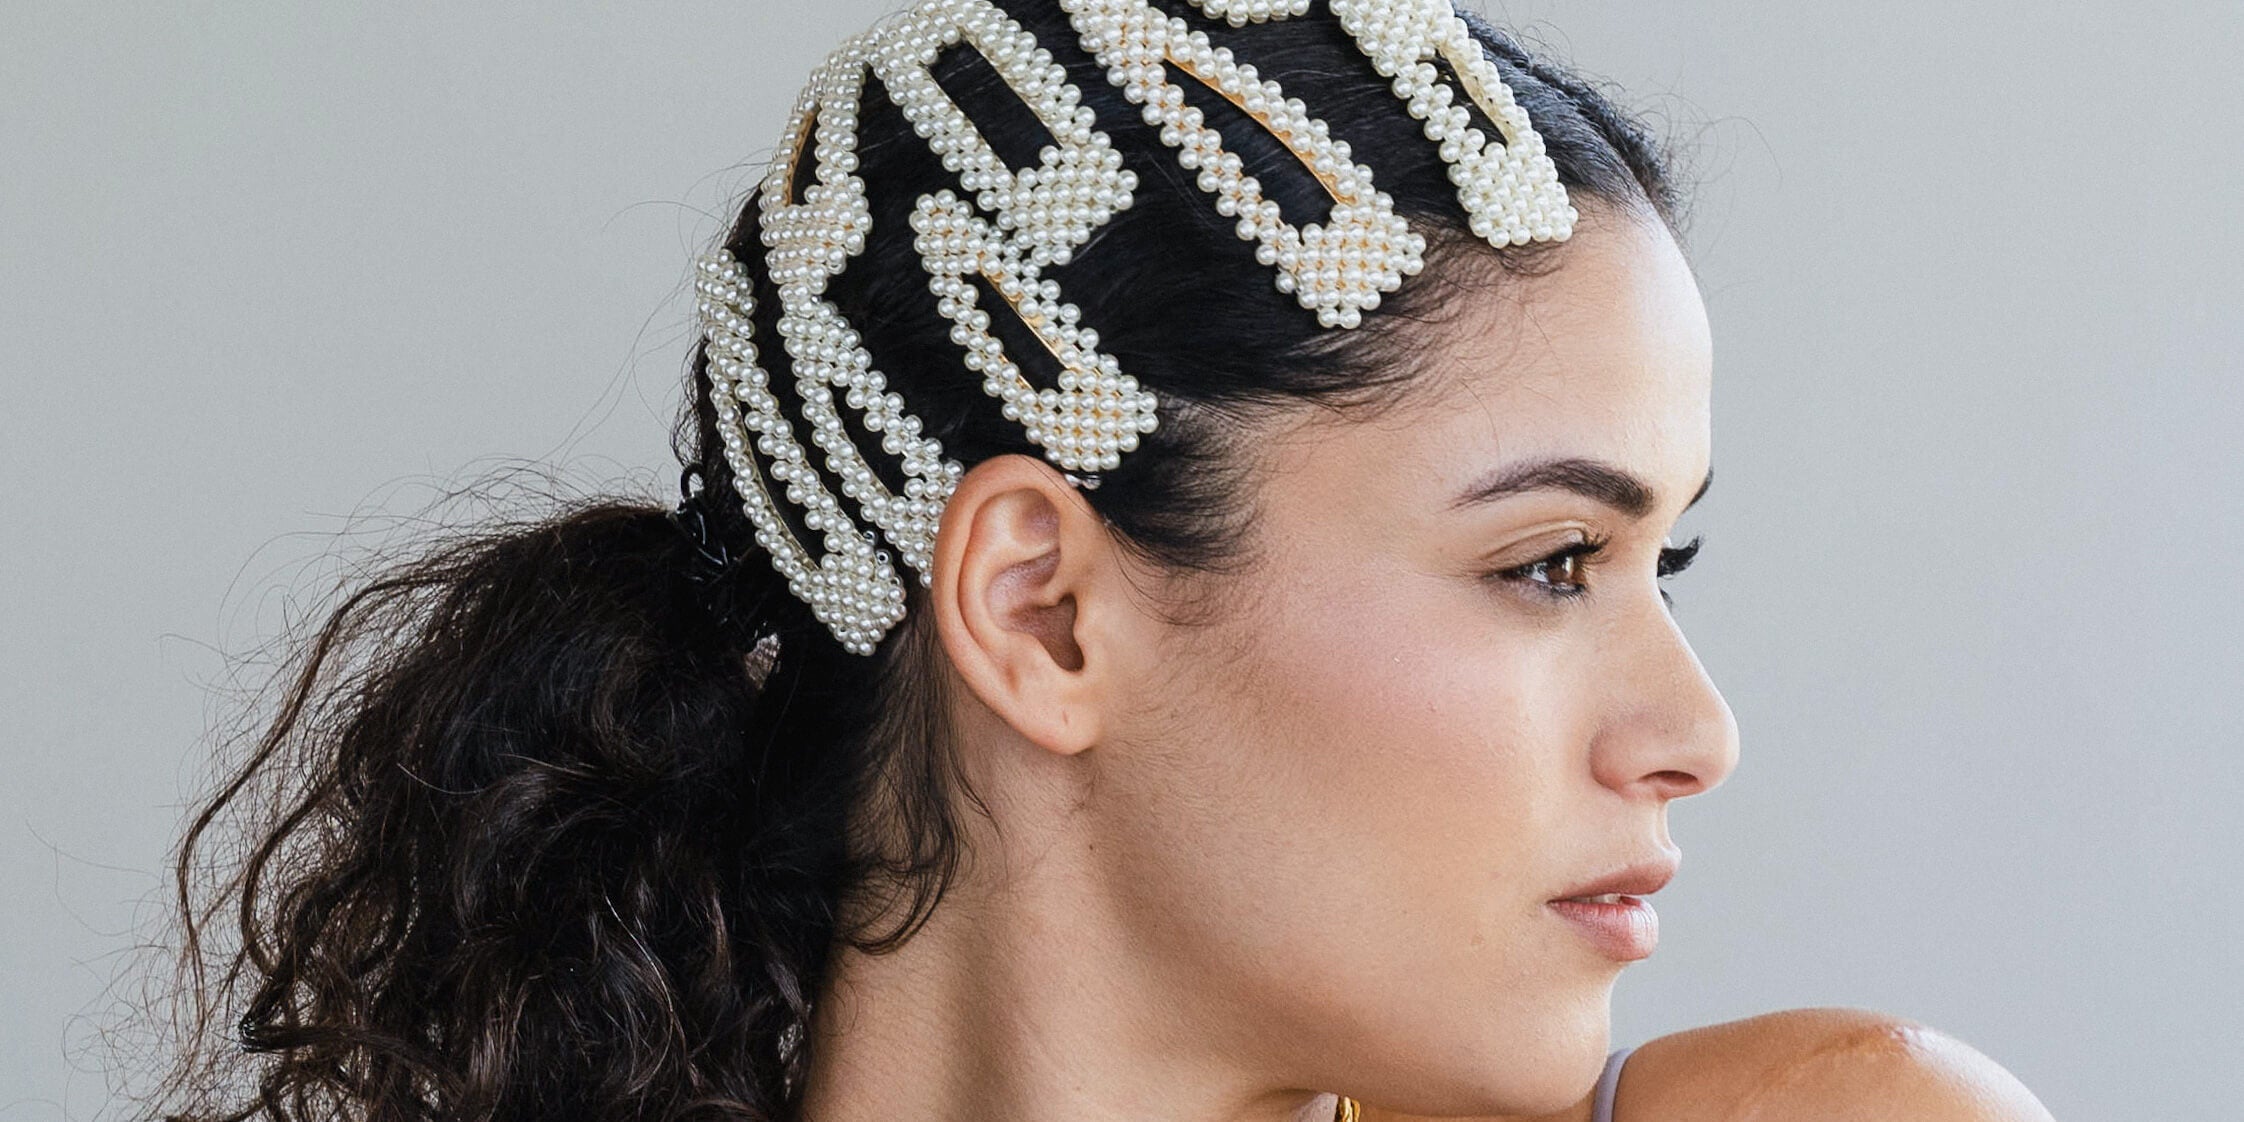 model is wearing pearl hair clips in her hair